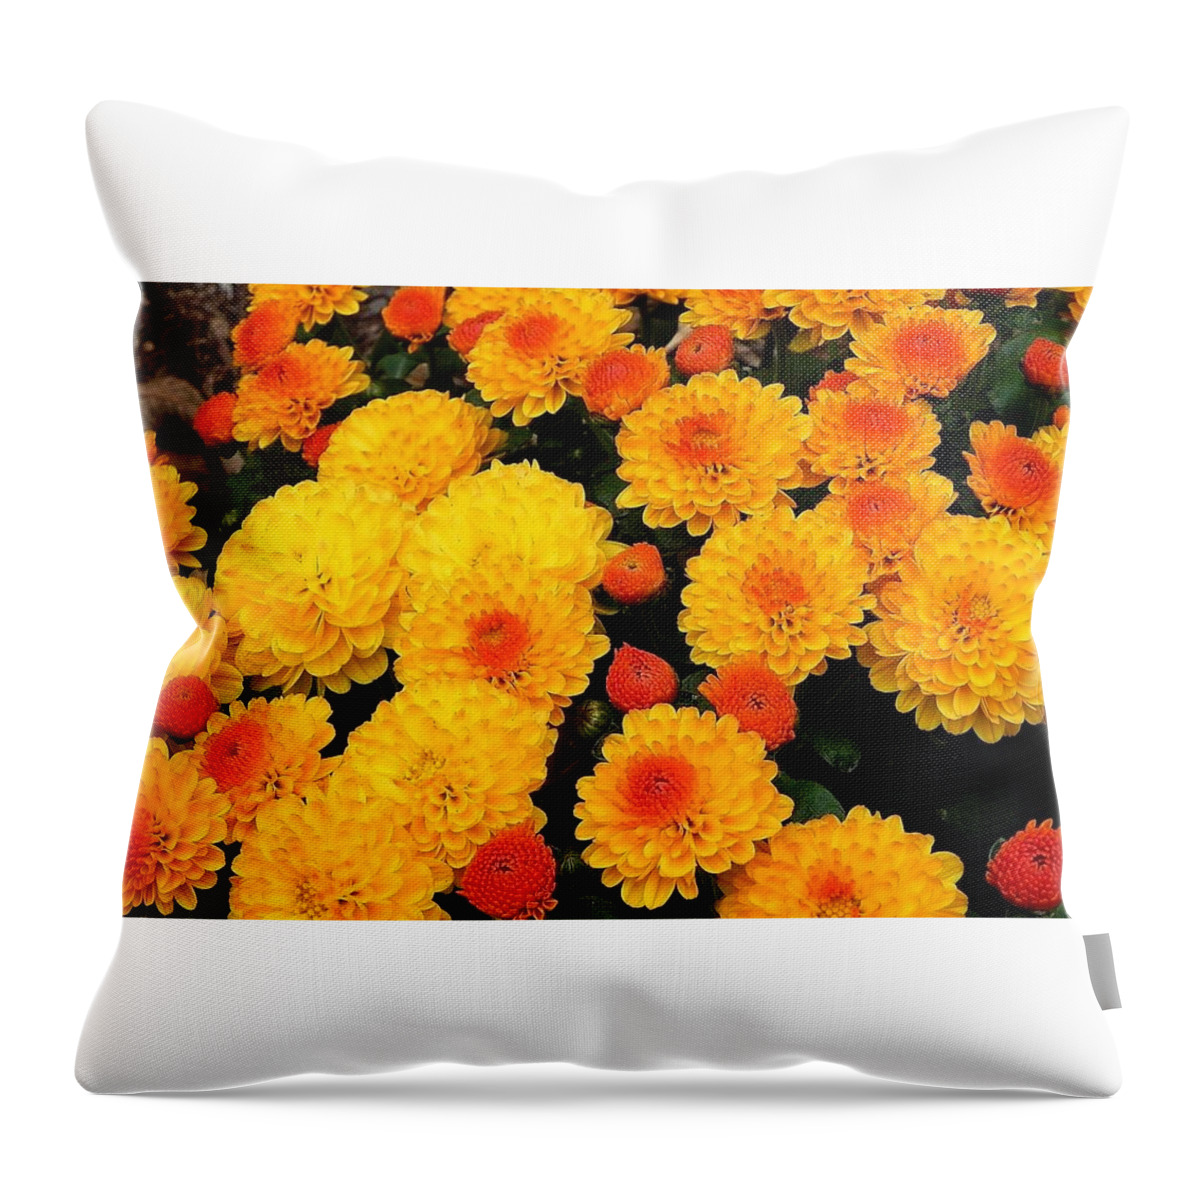 Chrysanthemum Throw Pillow featuring the photograph Chrysanthemum by Mariel Mcmeeking